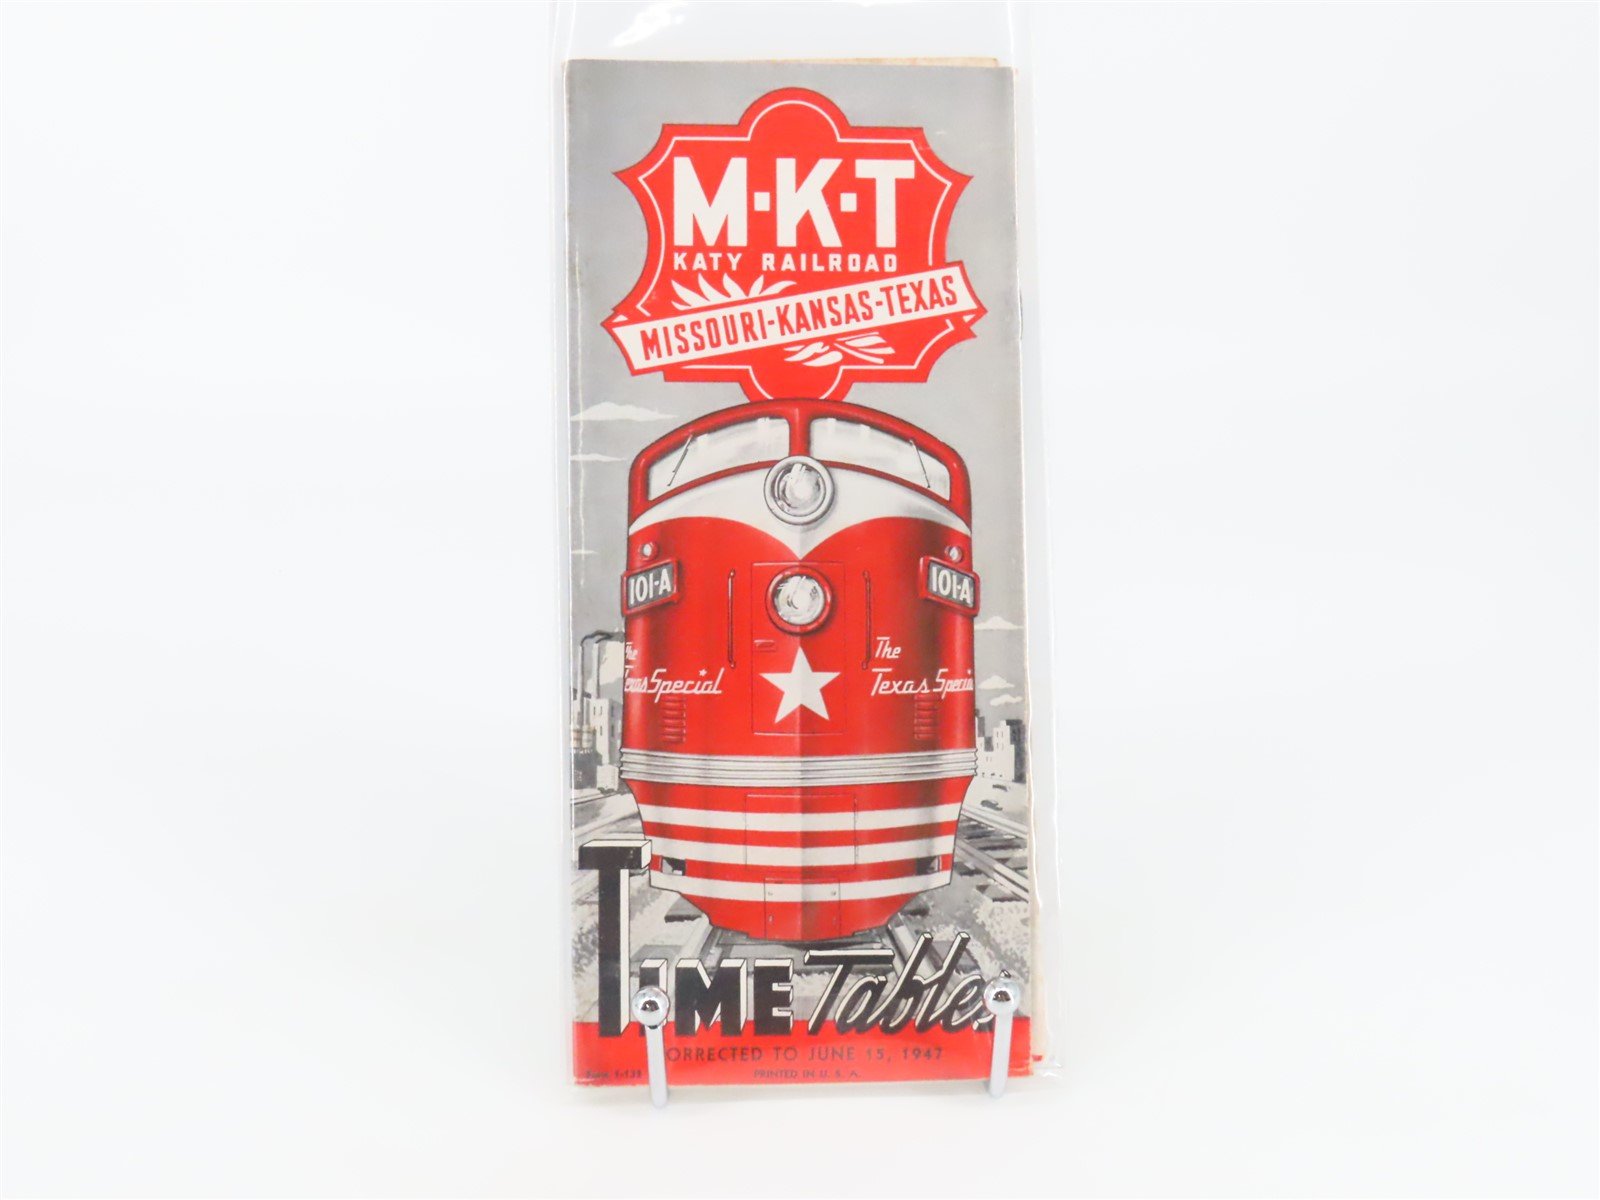 MKT Missouri Kansas Texas Katy Railroad Time Tables - June 15, 1947